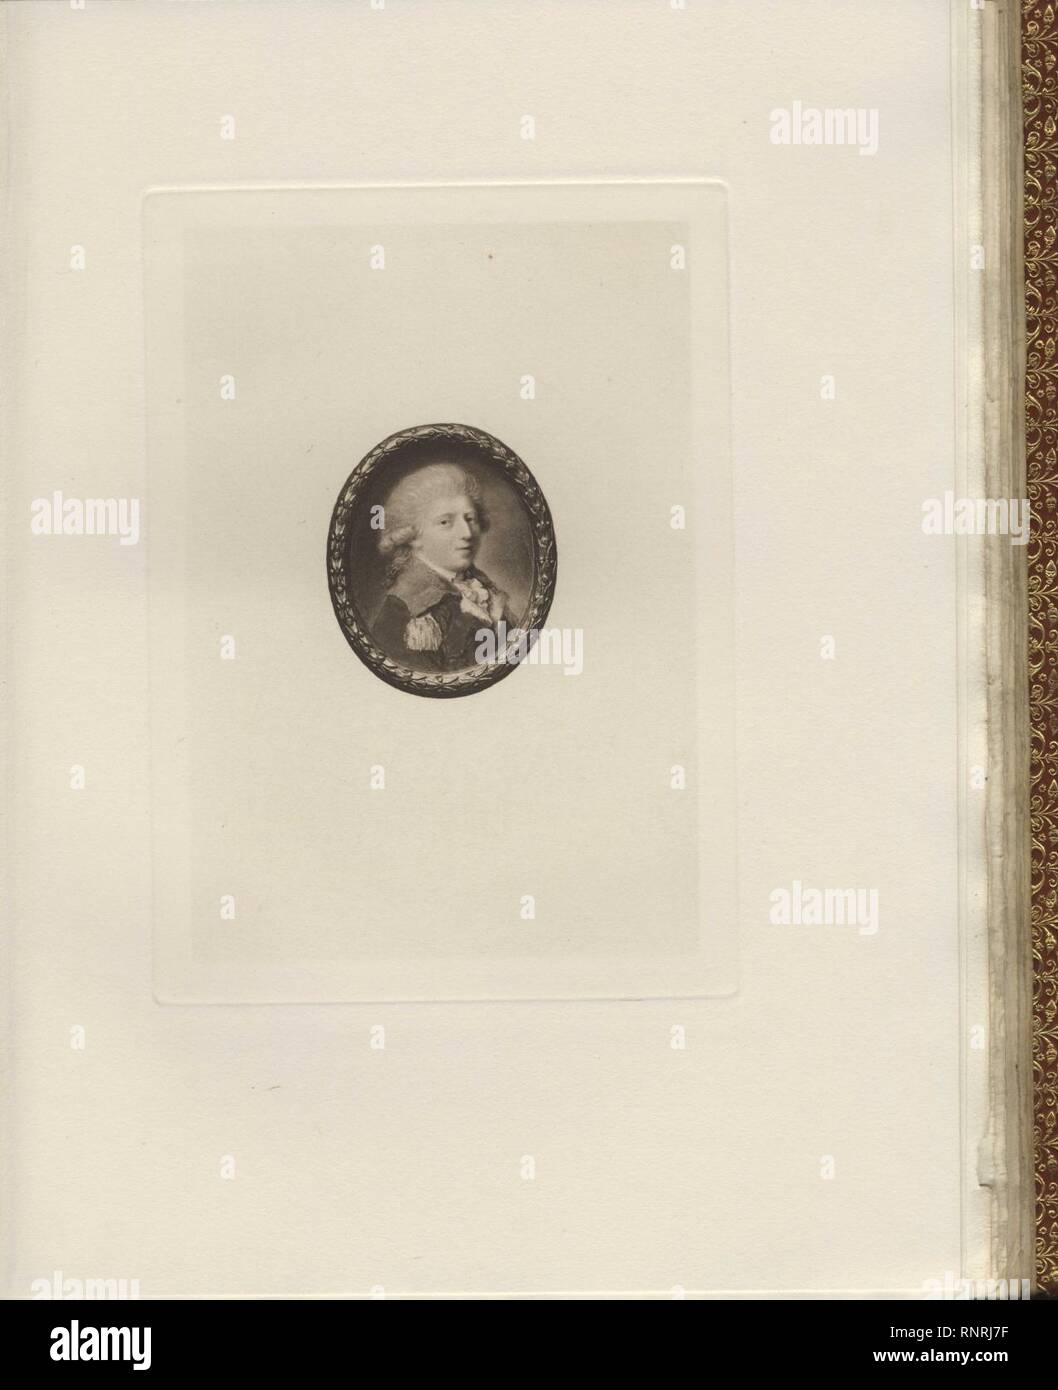 Catalogue of miniatures 1914 No. 62. Stock Photo